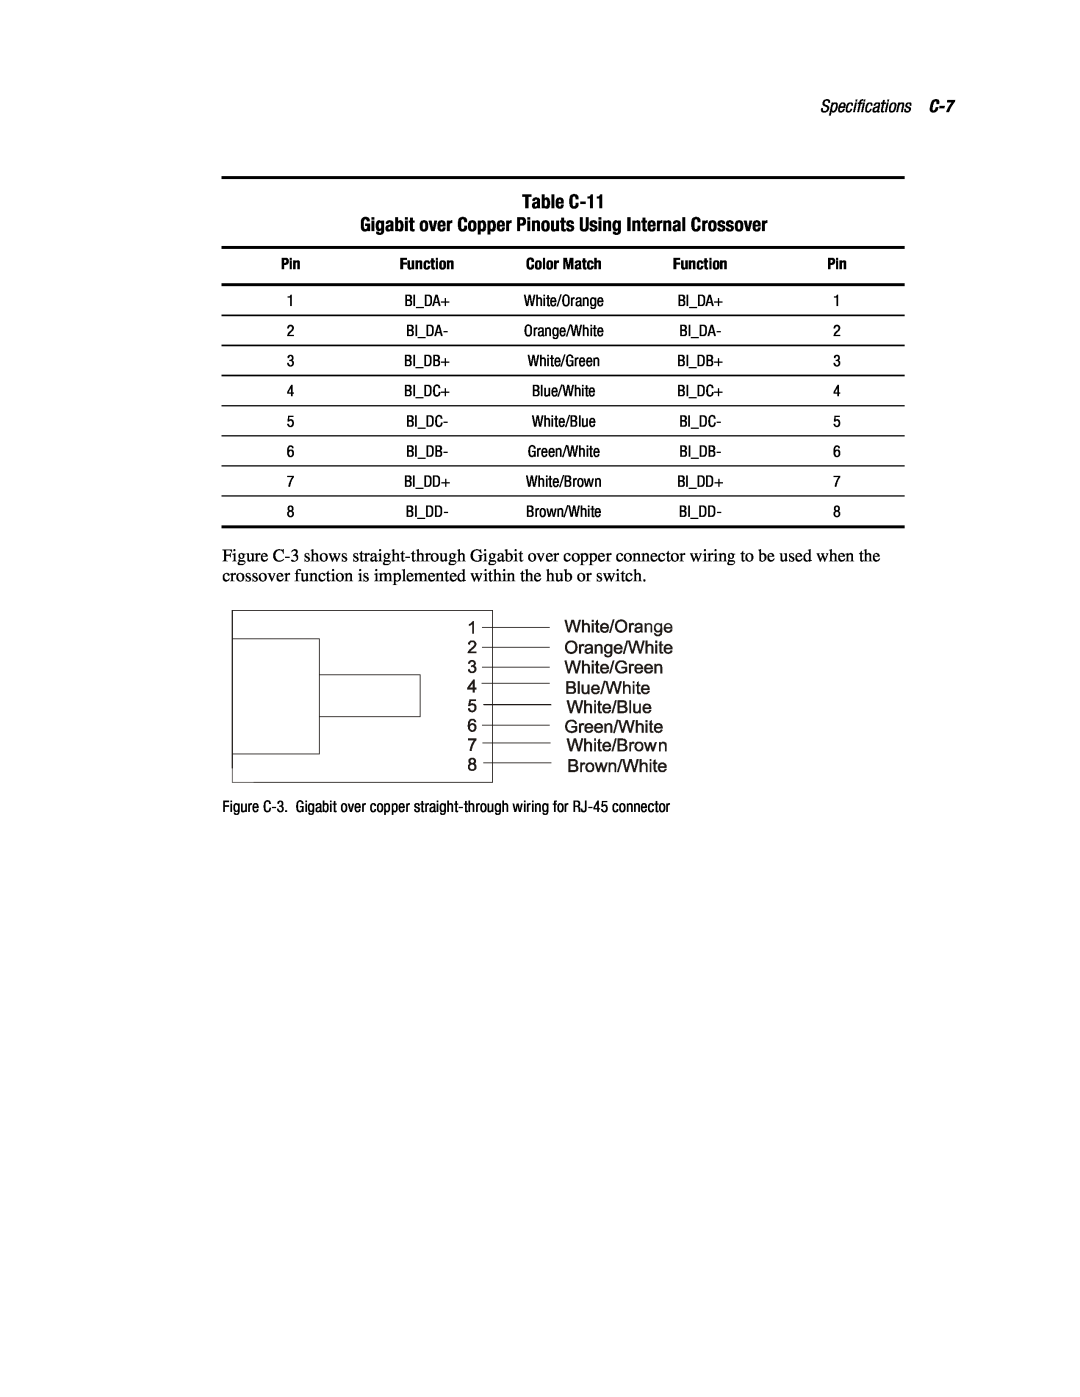 Compaq 3134 manual Table C-11 Gigabit over Copper Pinouts Using Internal Crossover, Specifications C-7, Bidb+, Bidc+, Bidd+ 